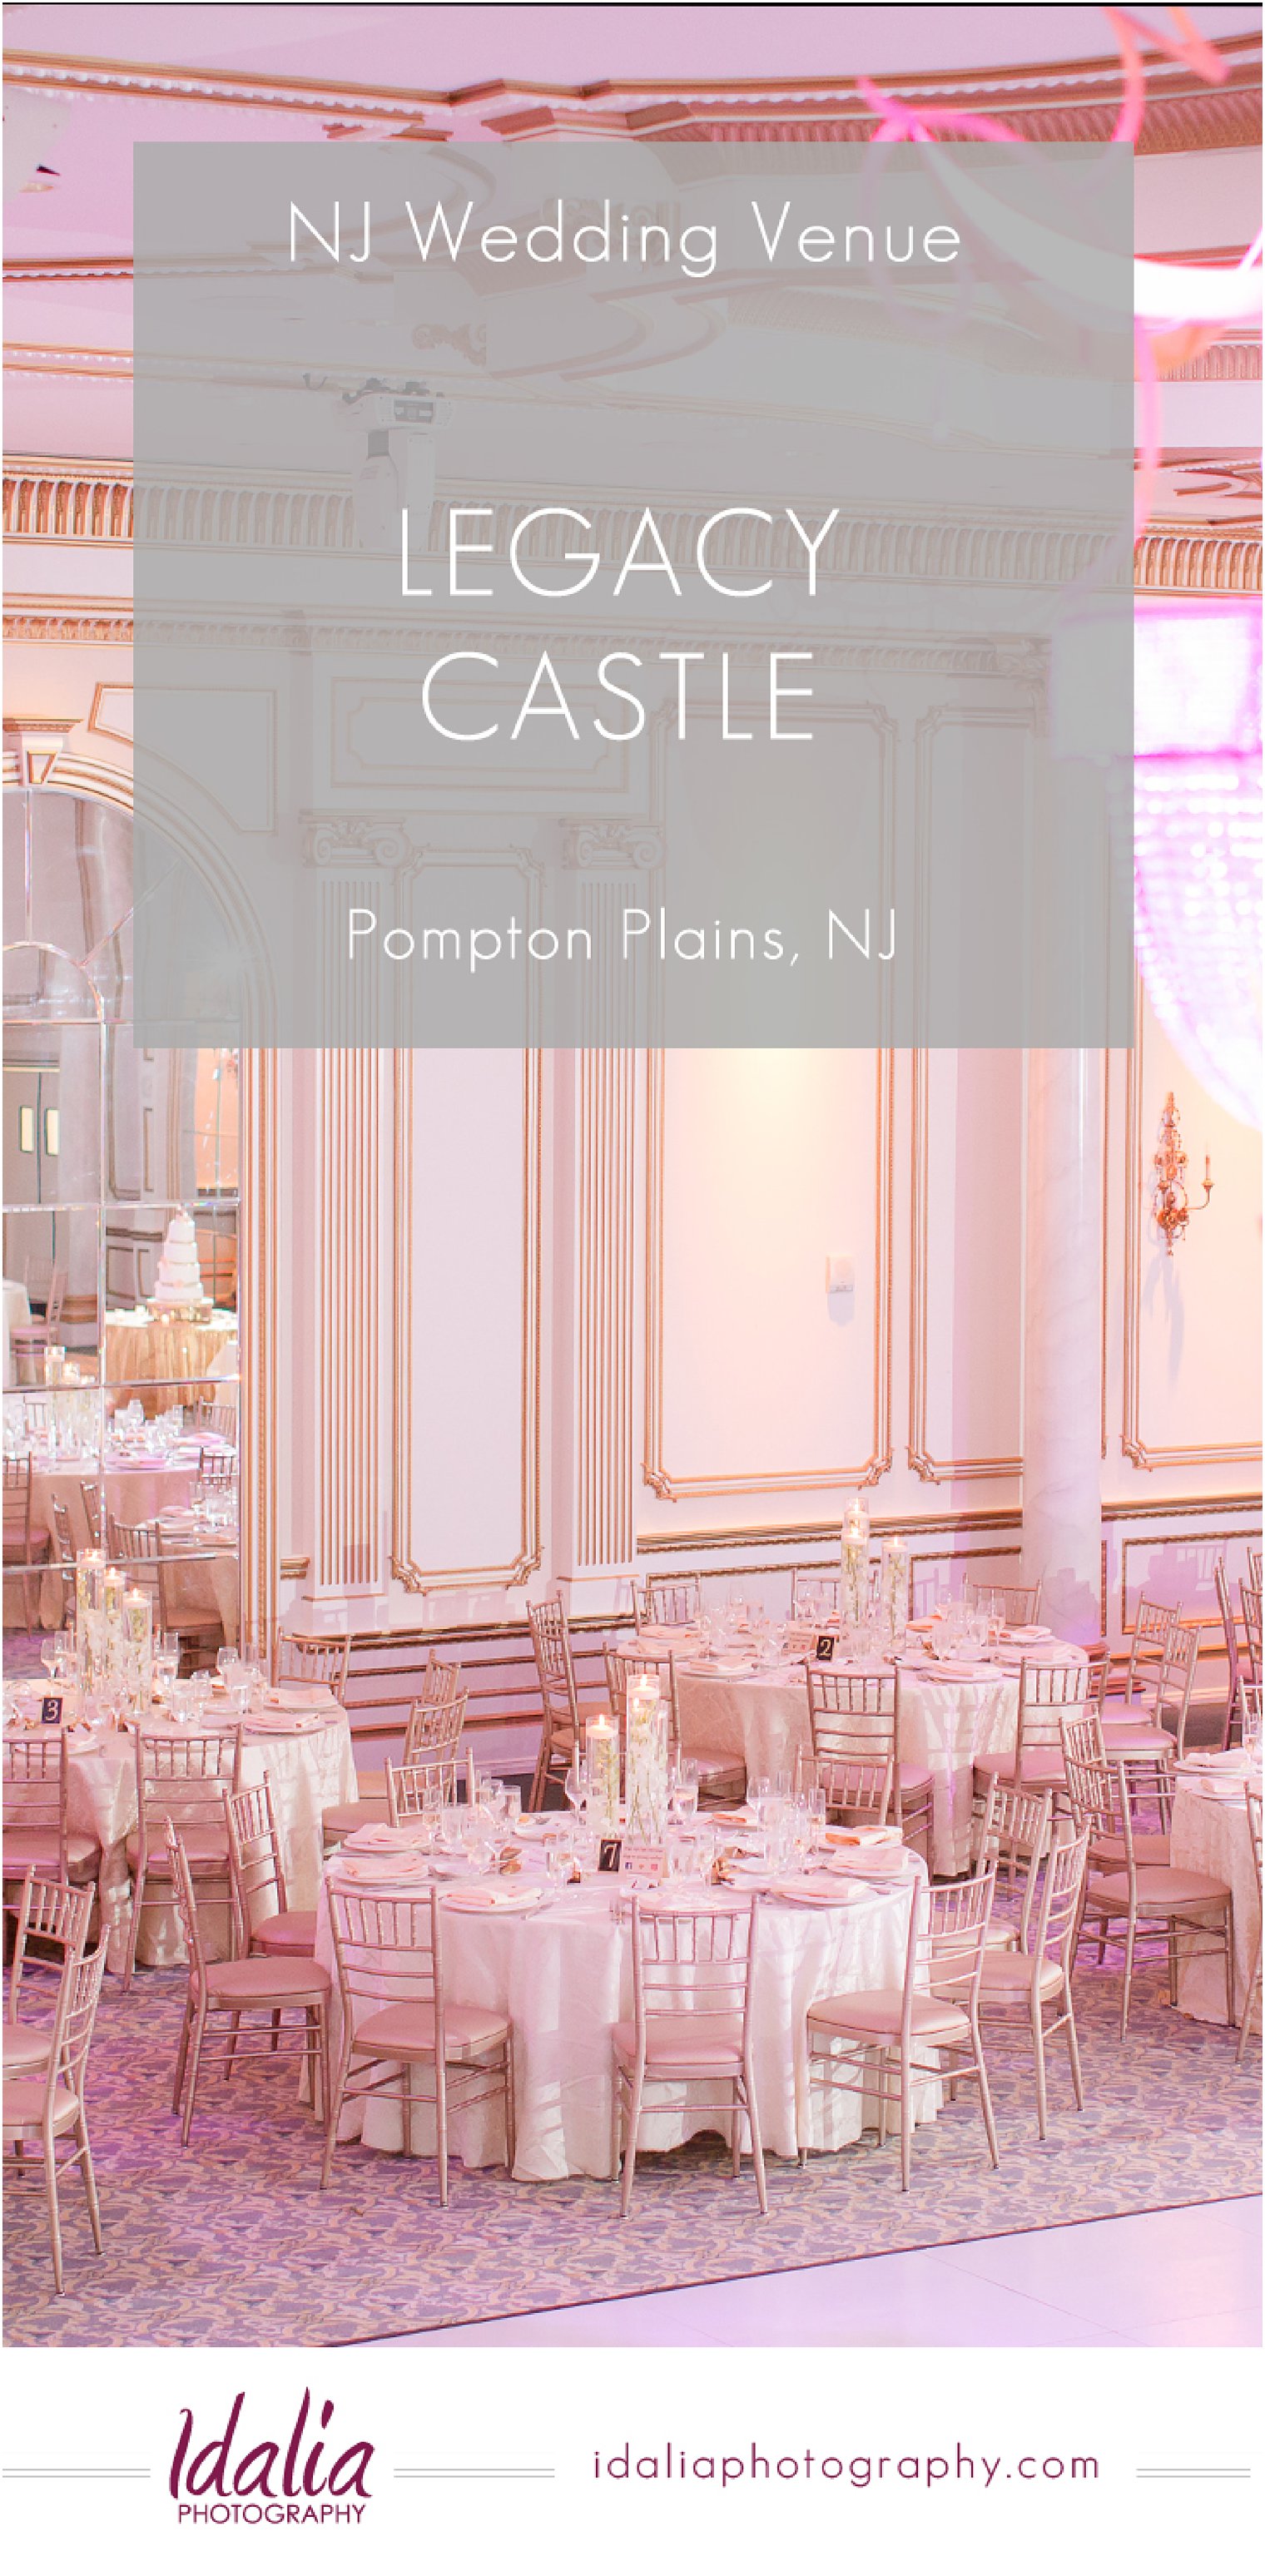 Venue Spotlight on Legacy Castle, a luxury NJ Wedding Venue in Pompton Plains, NJ | Photos by Idalia Photography